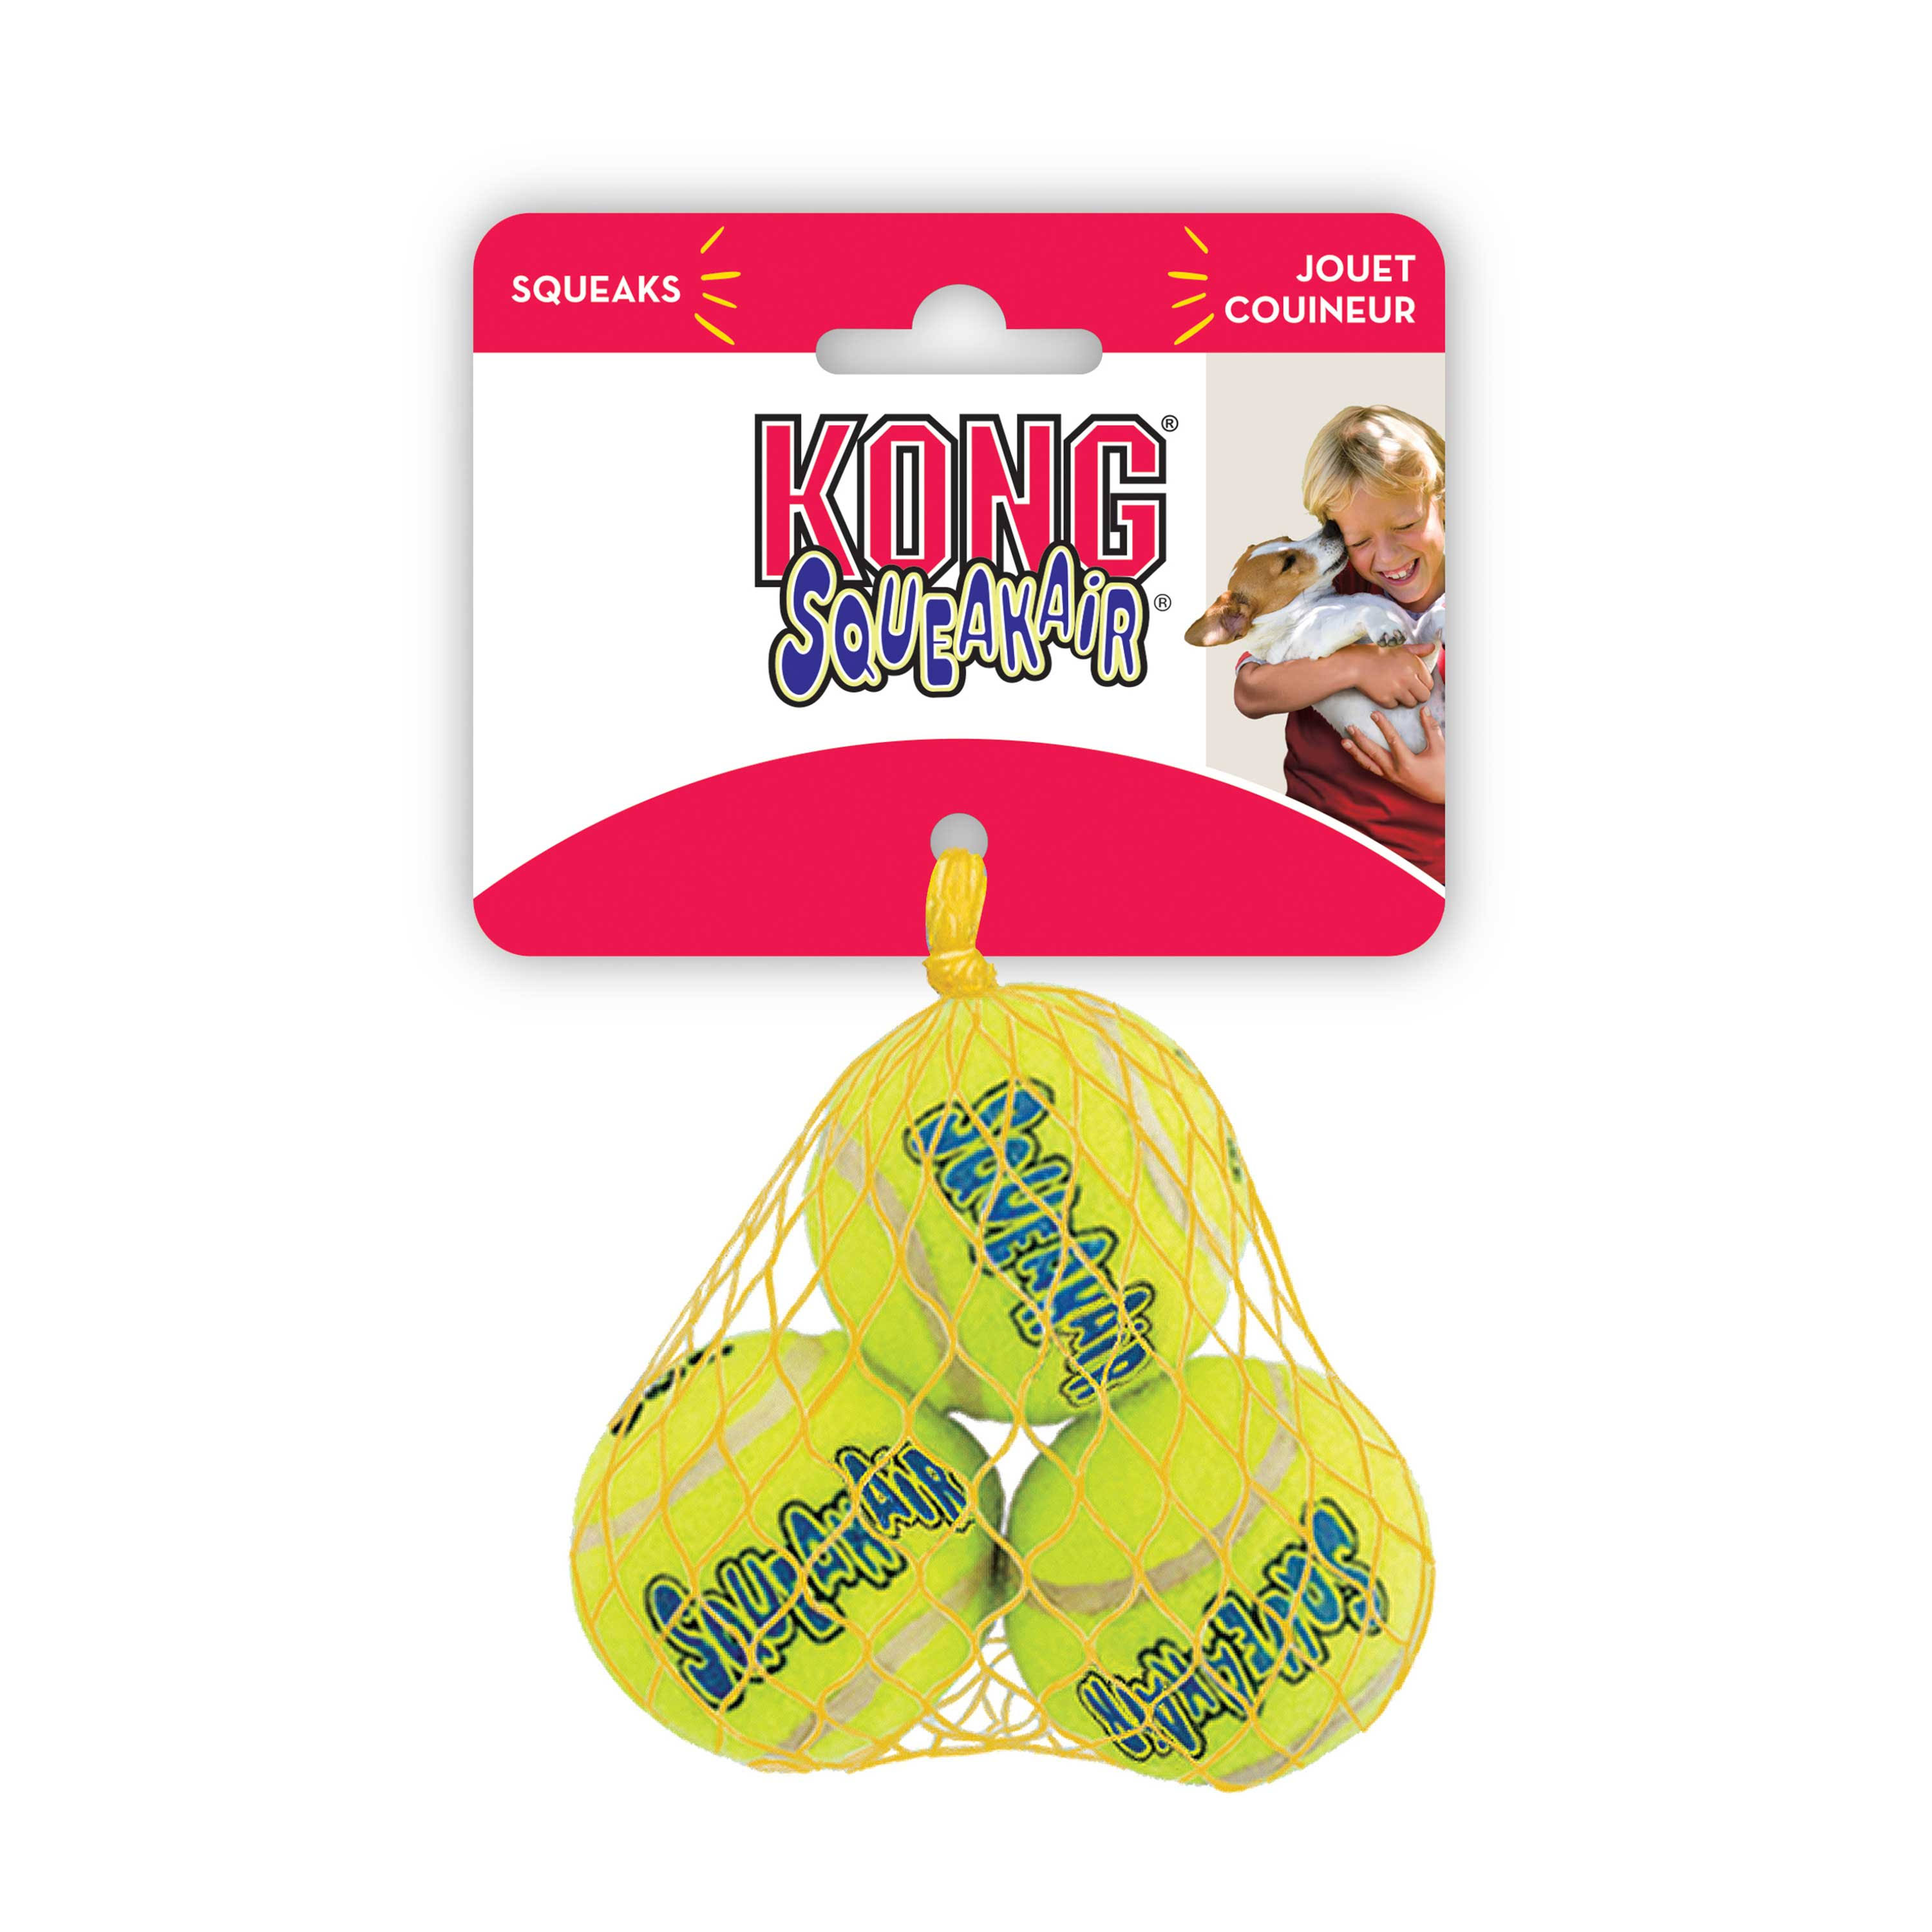 Kong Air Dog Squeaker Tennis Balls Dog Toy - Small, 3 Pack